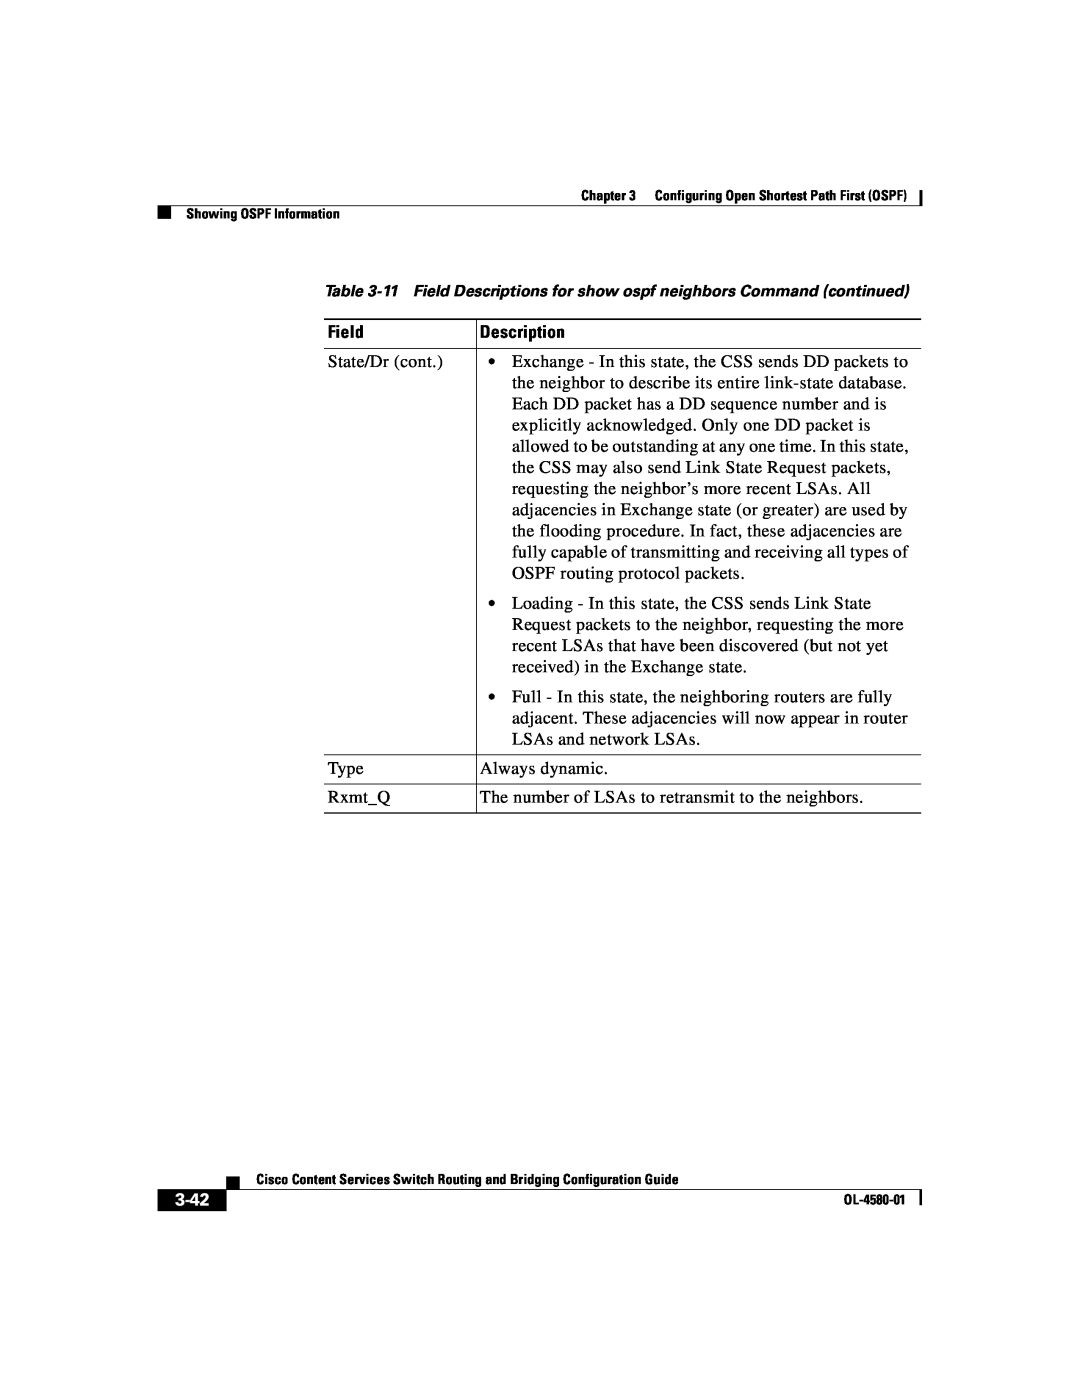 Cisco Systems OL-4580-01 manual Field, Description, 3-42 